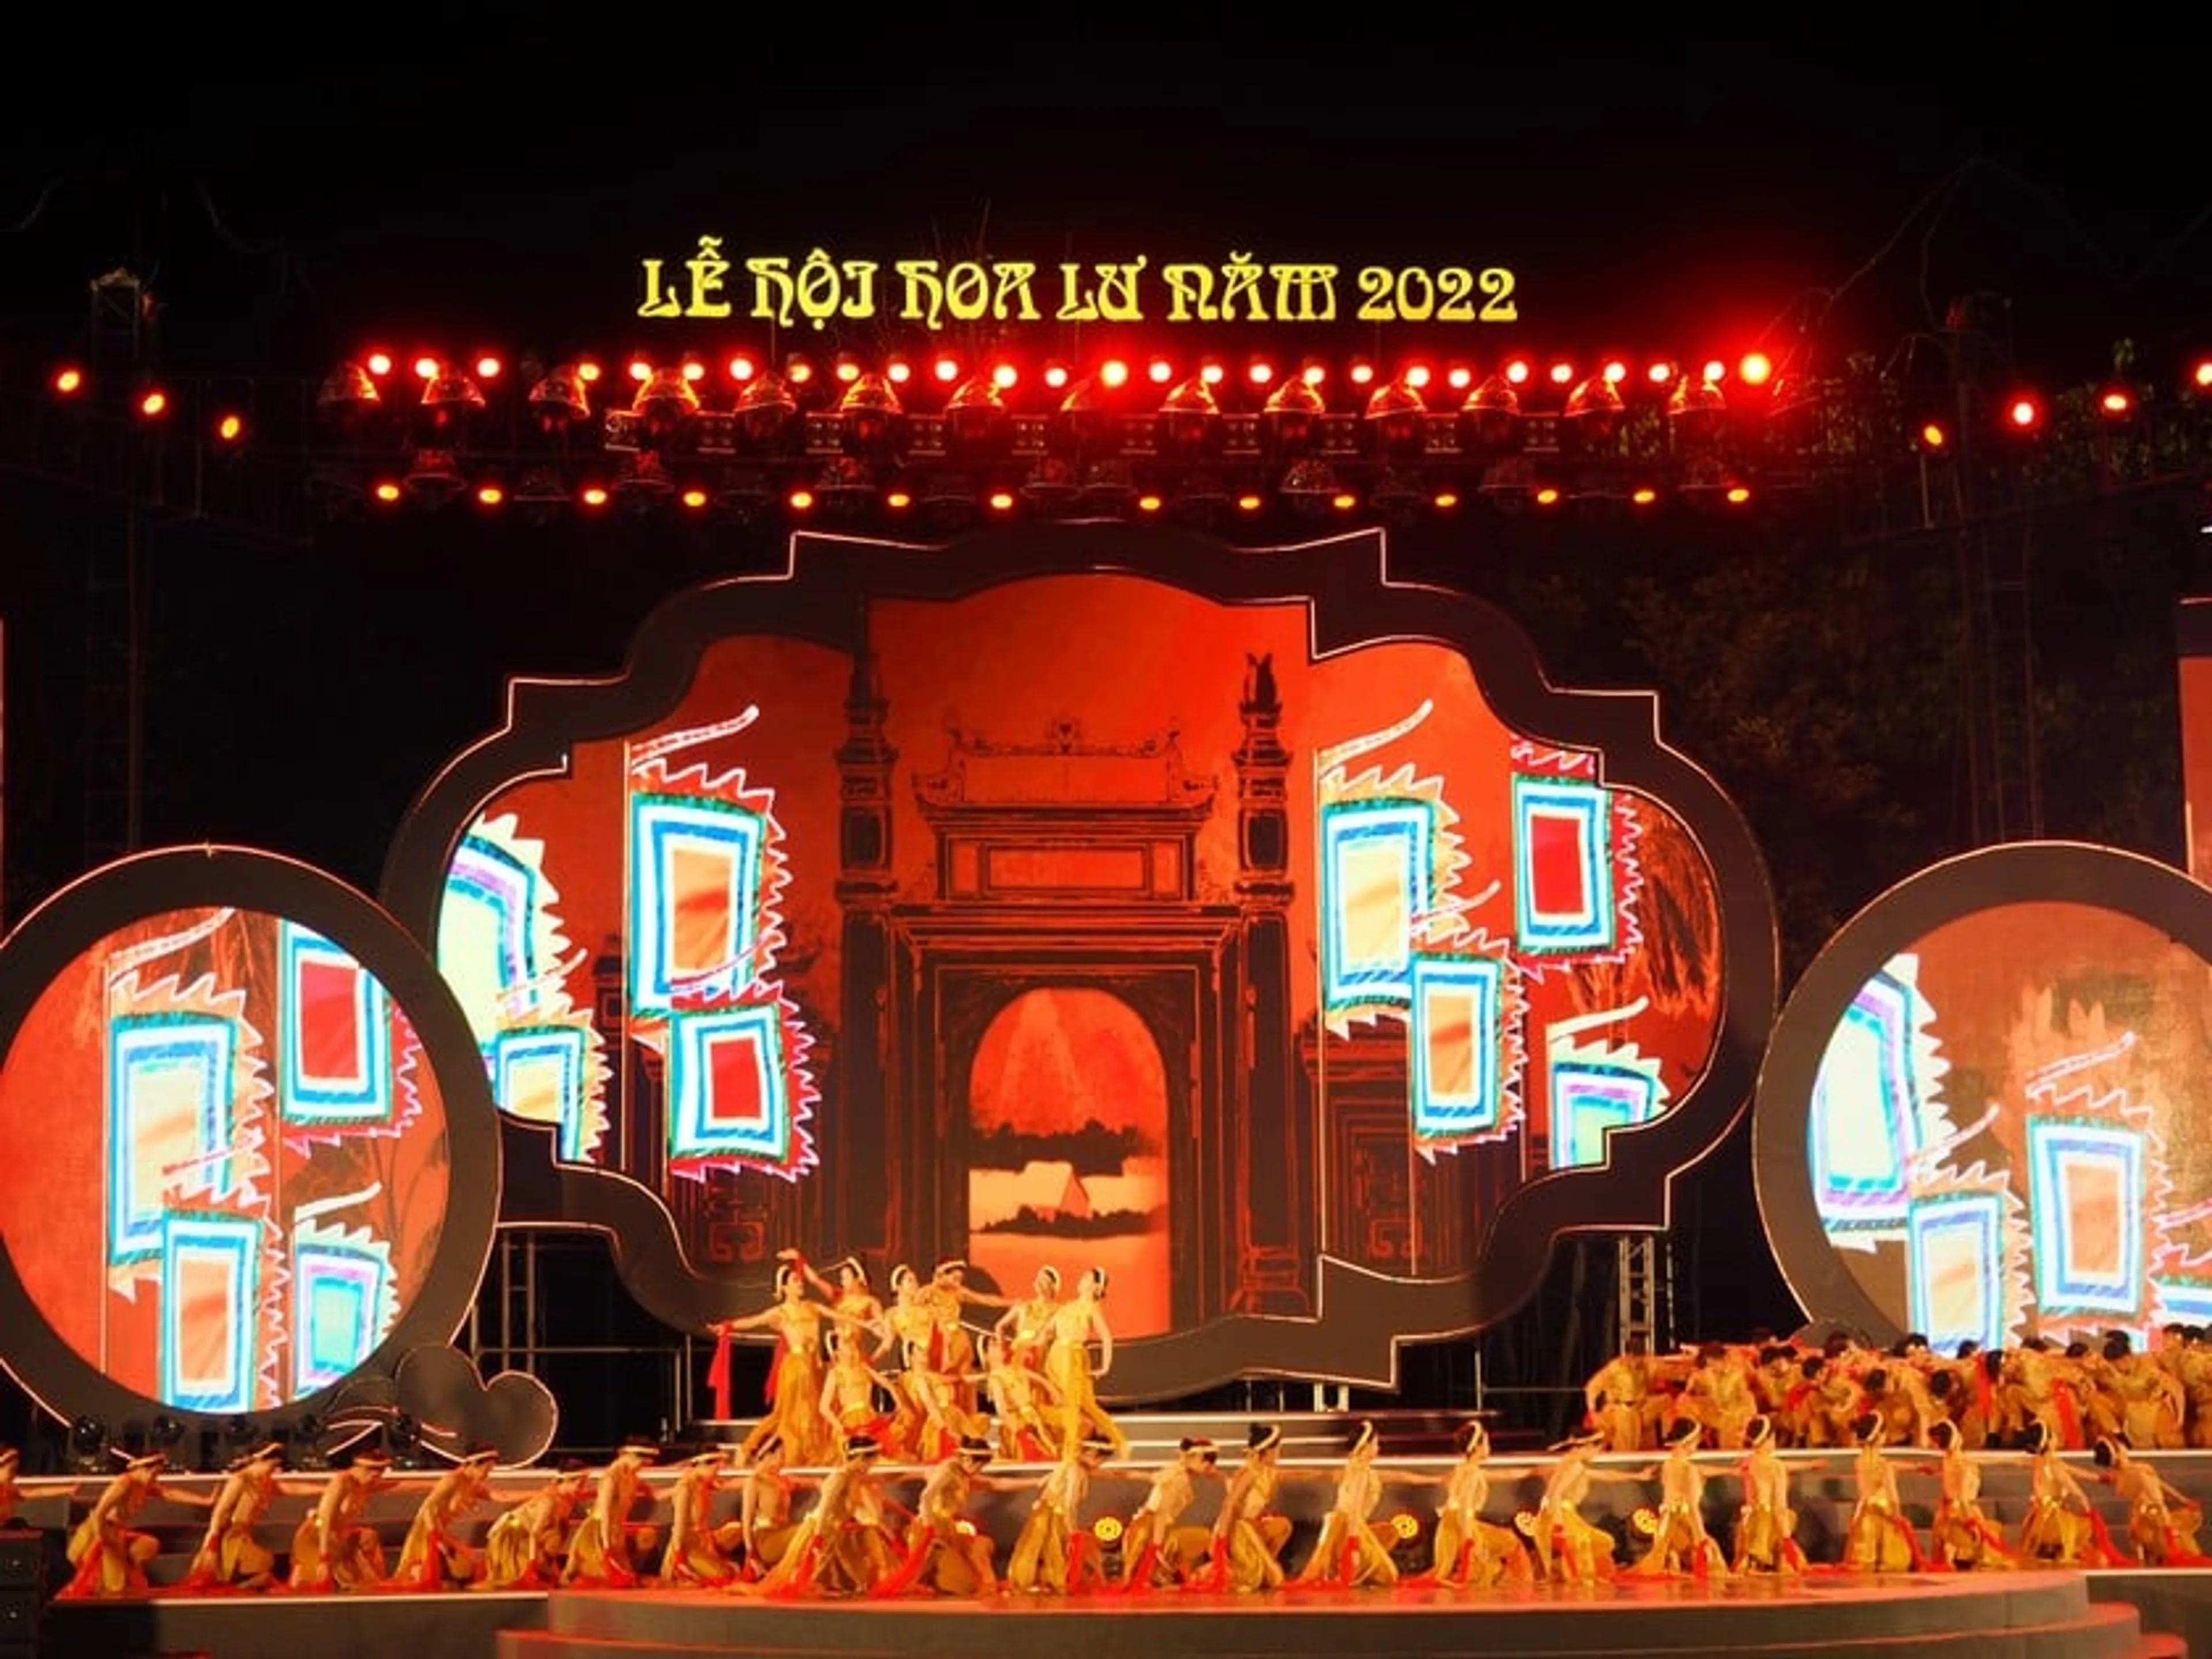 Discover the Hoa Lu Festival: A Cultural Landmark of Ninh Binh